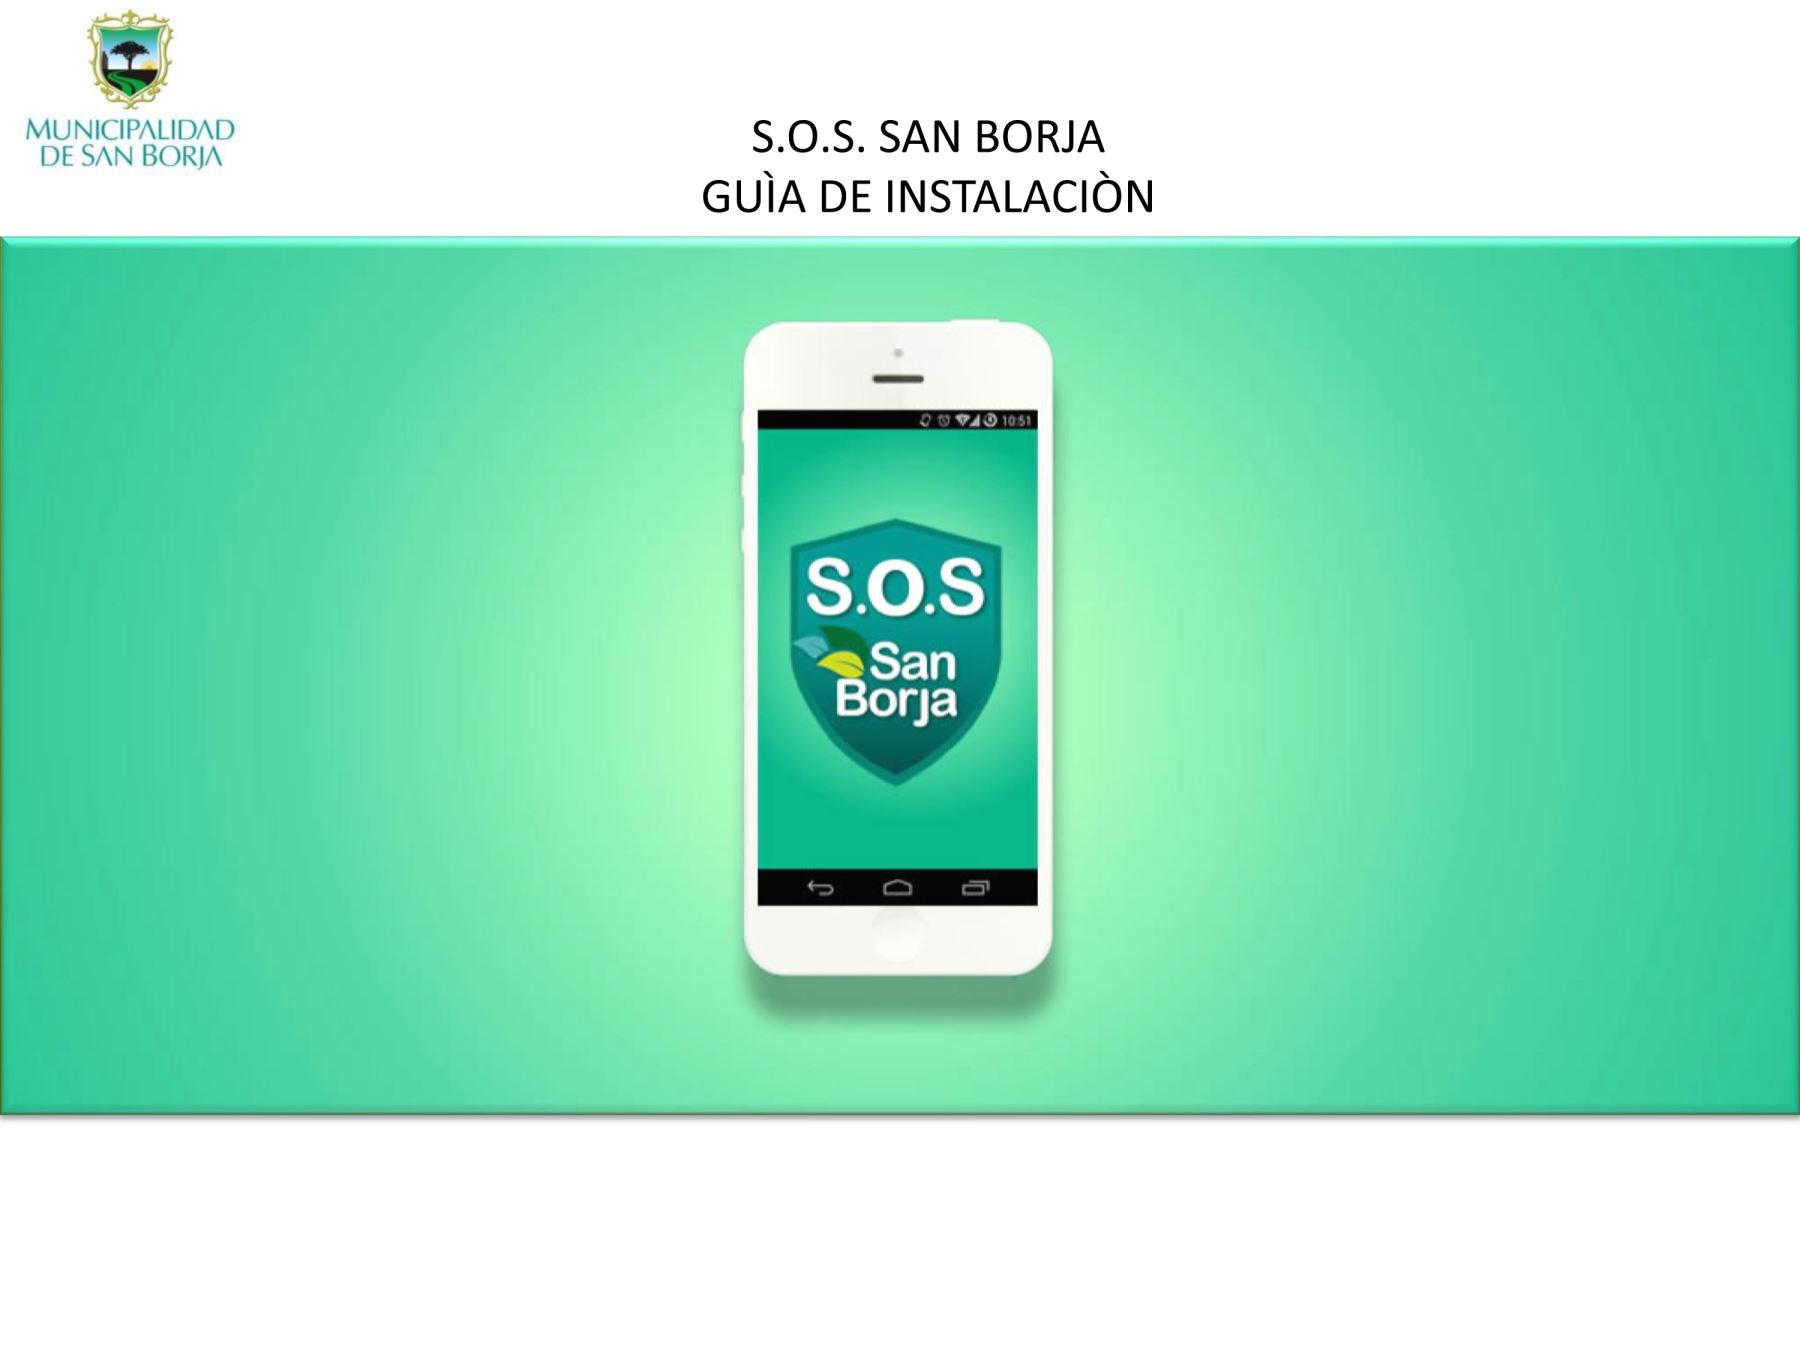 Municipio de San Borja lanza nueva aplicación para seguridad ciudadana descargable gratuitamente para teléfonos celulares.